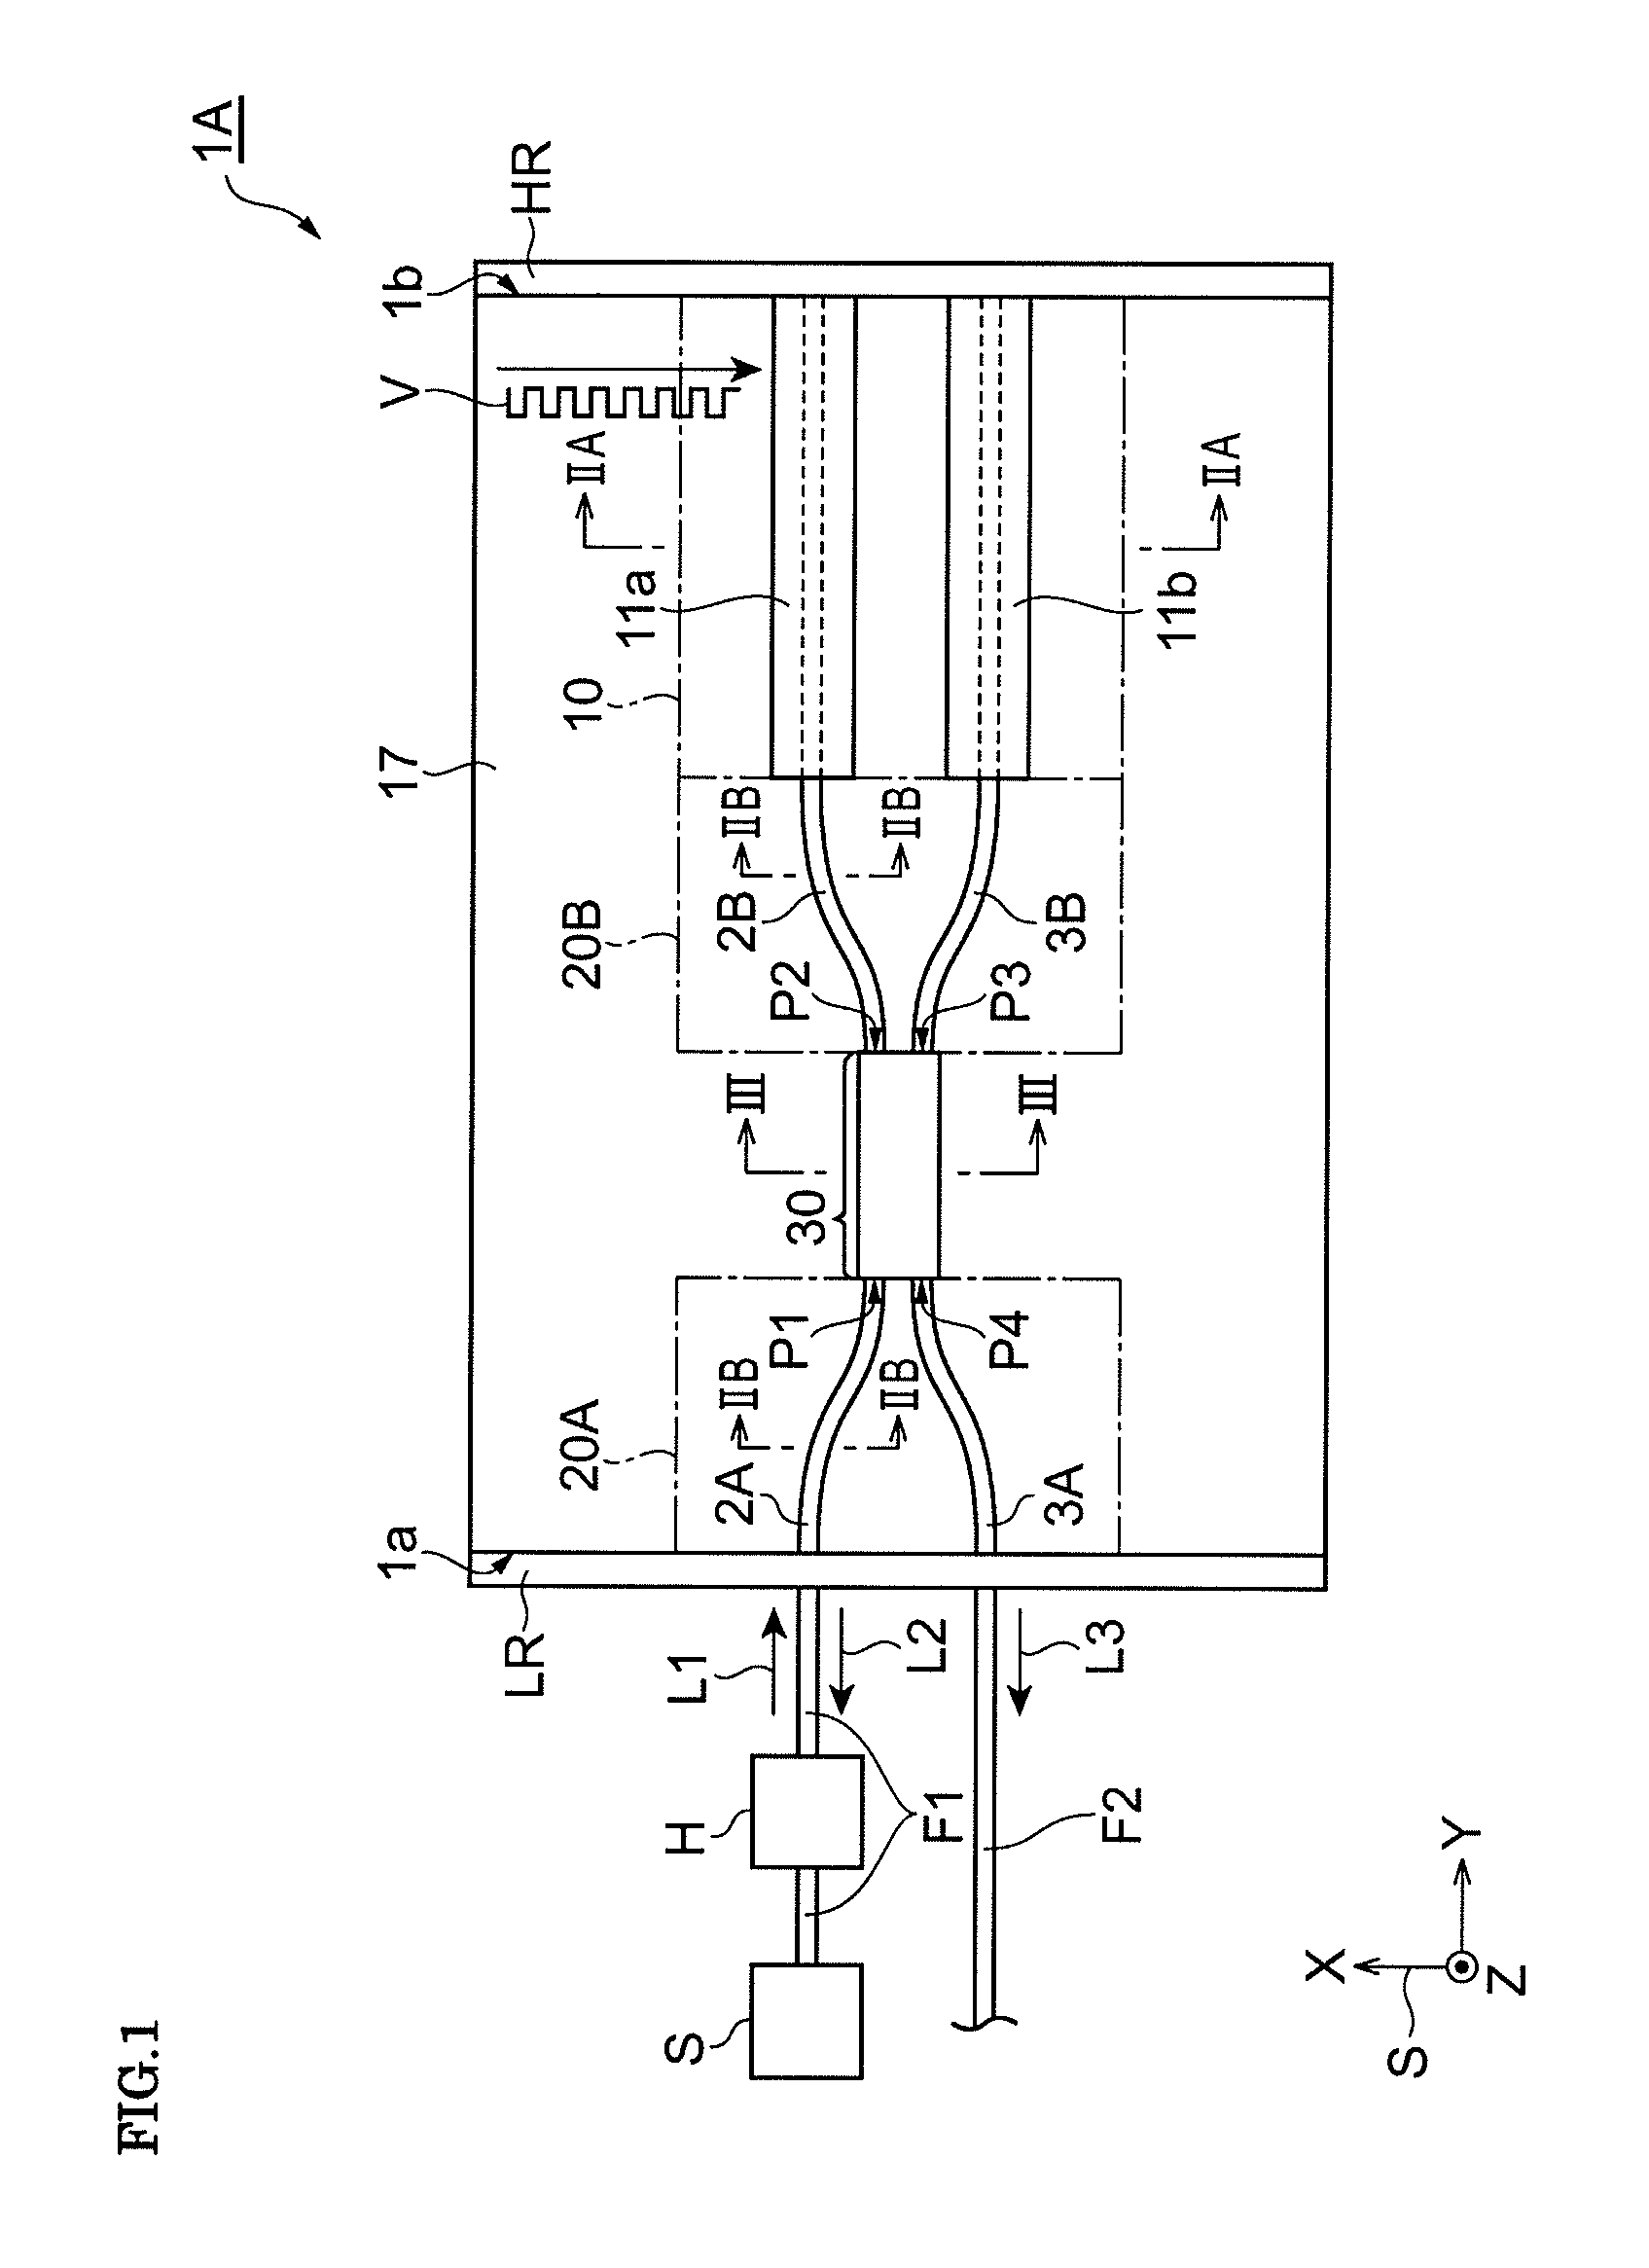 Mach-zehnder interferometer type optical modulator